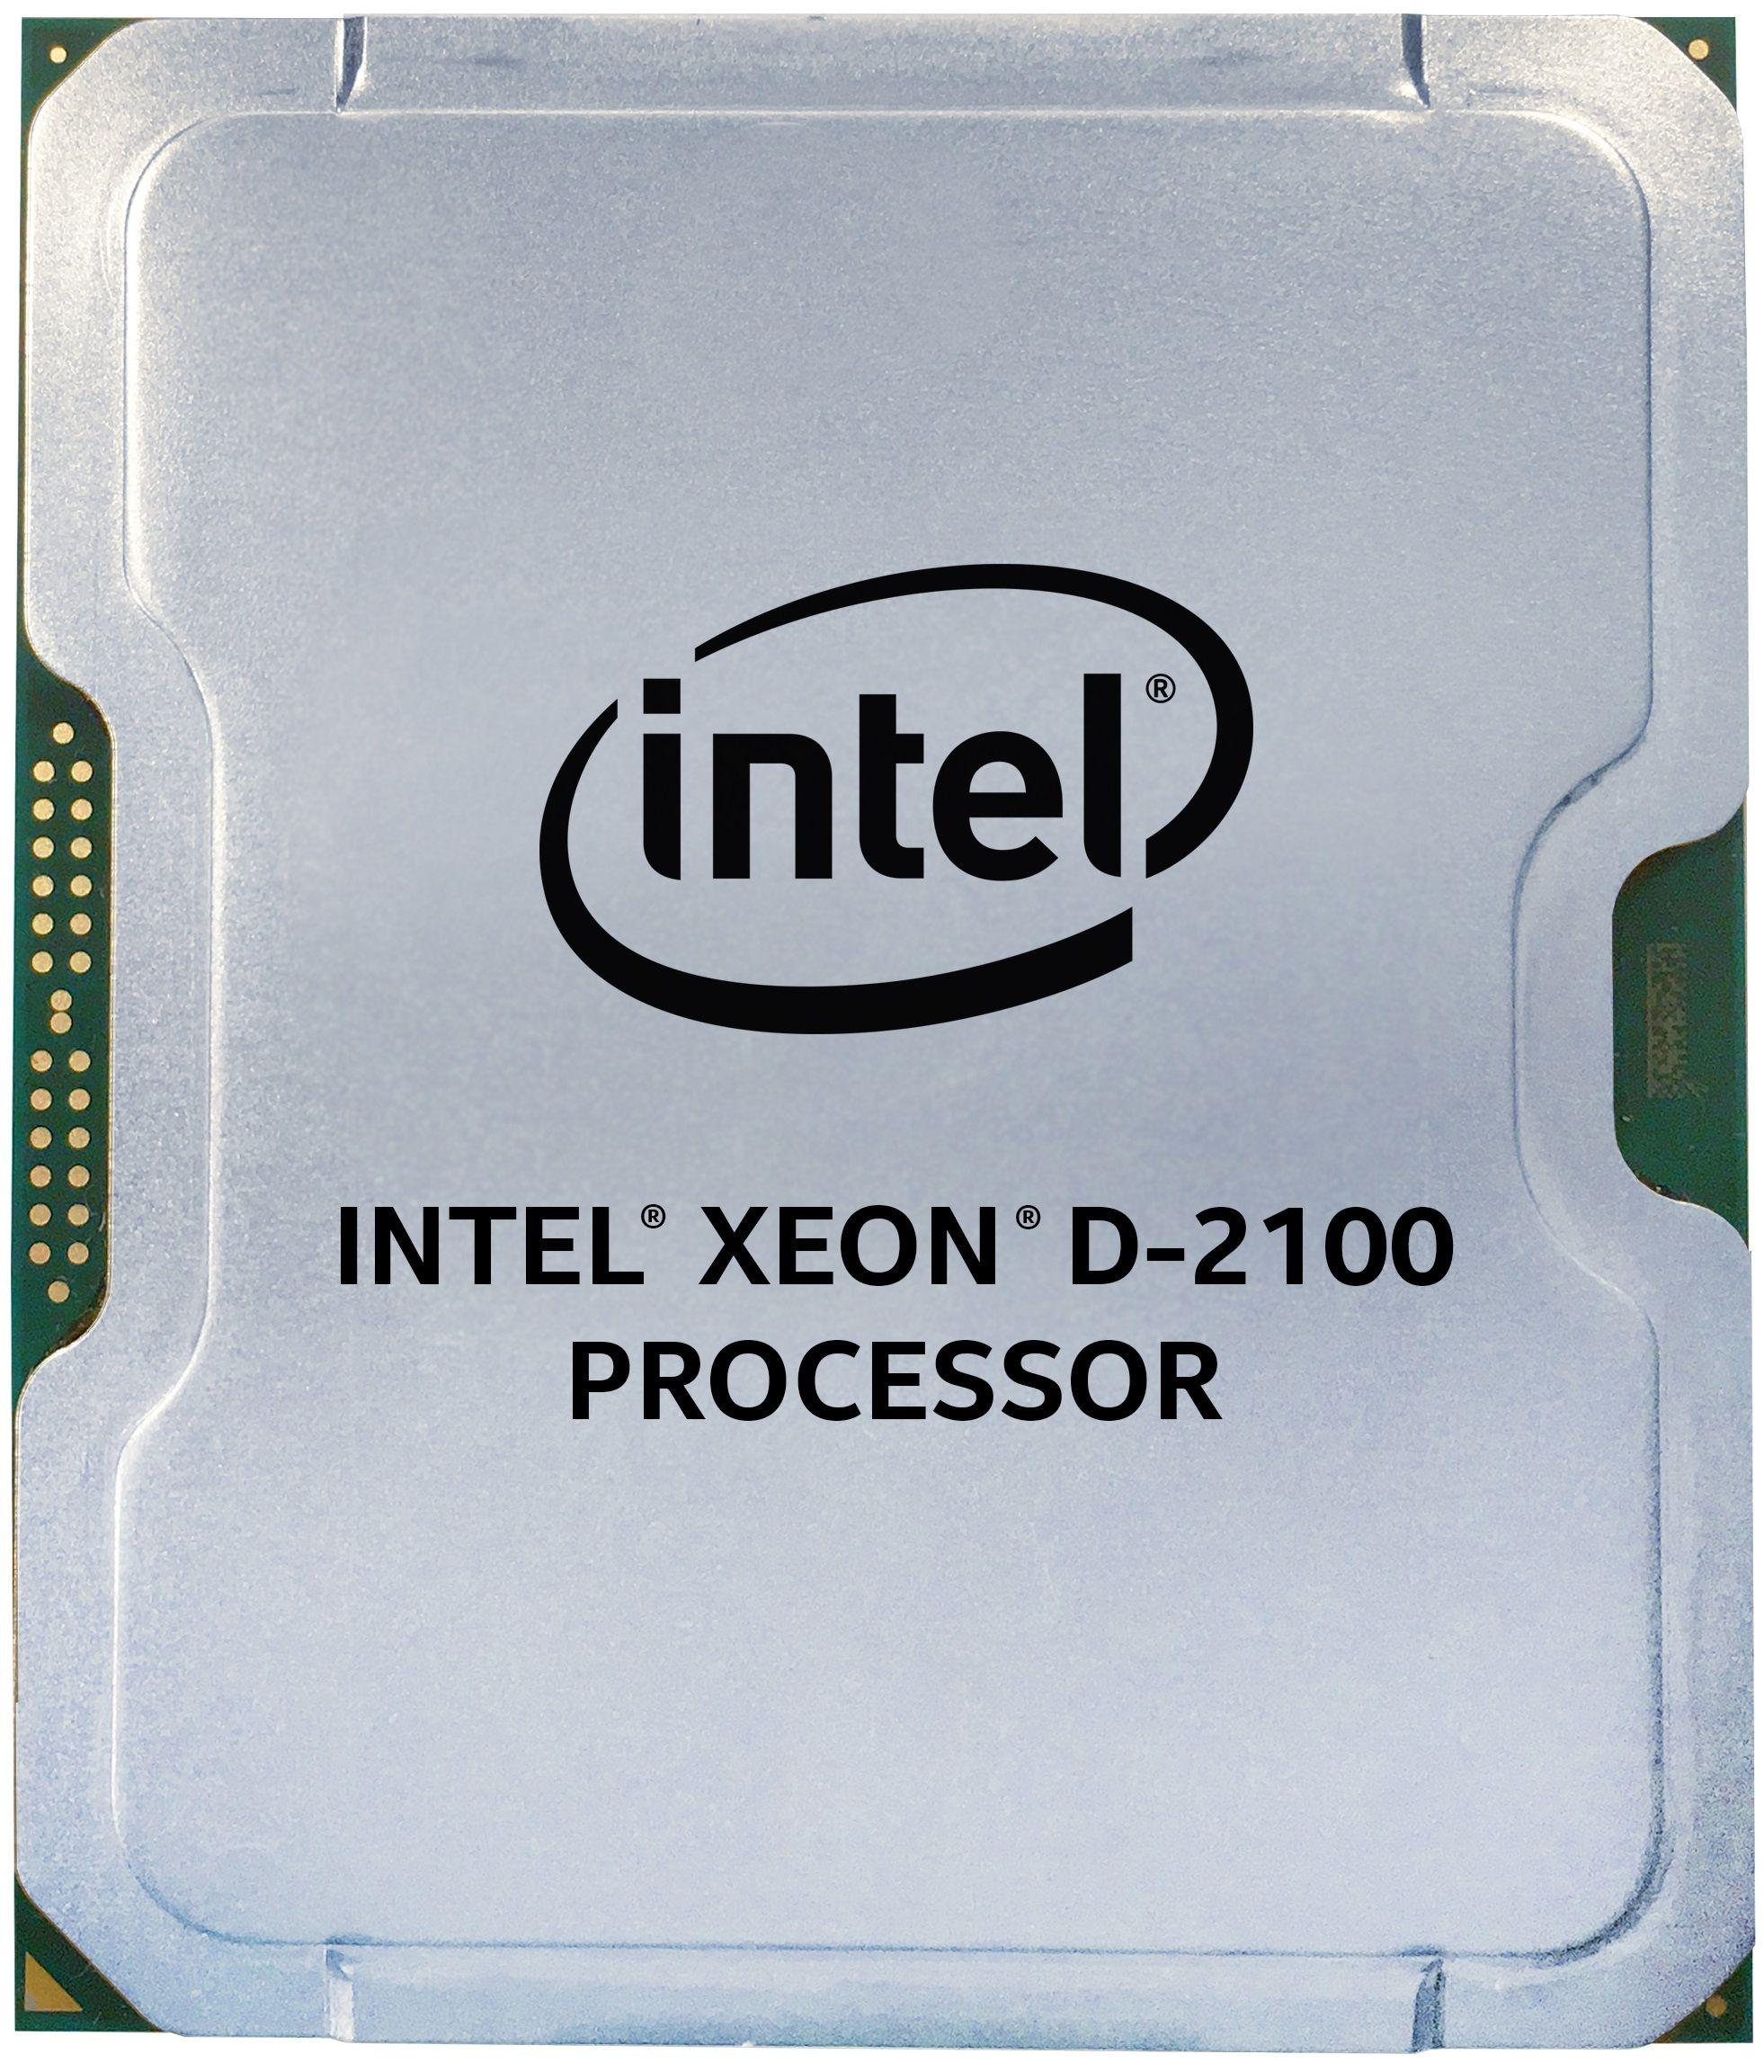 New Intel Logo - Intel Xeon D-2100 Processor Extends Intelligence to Edge, Enabling ...